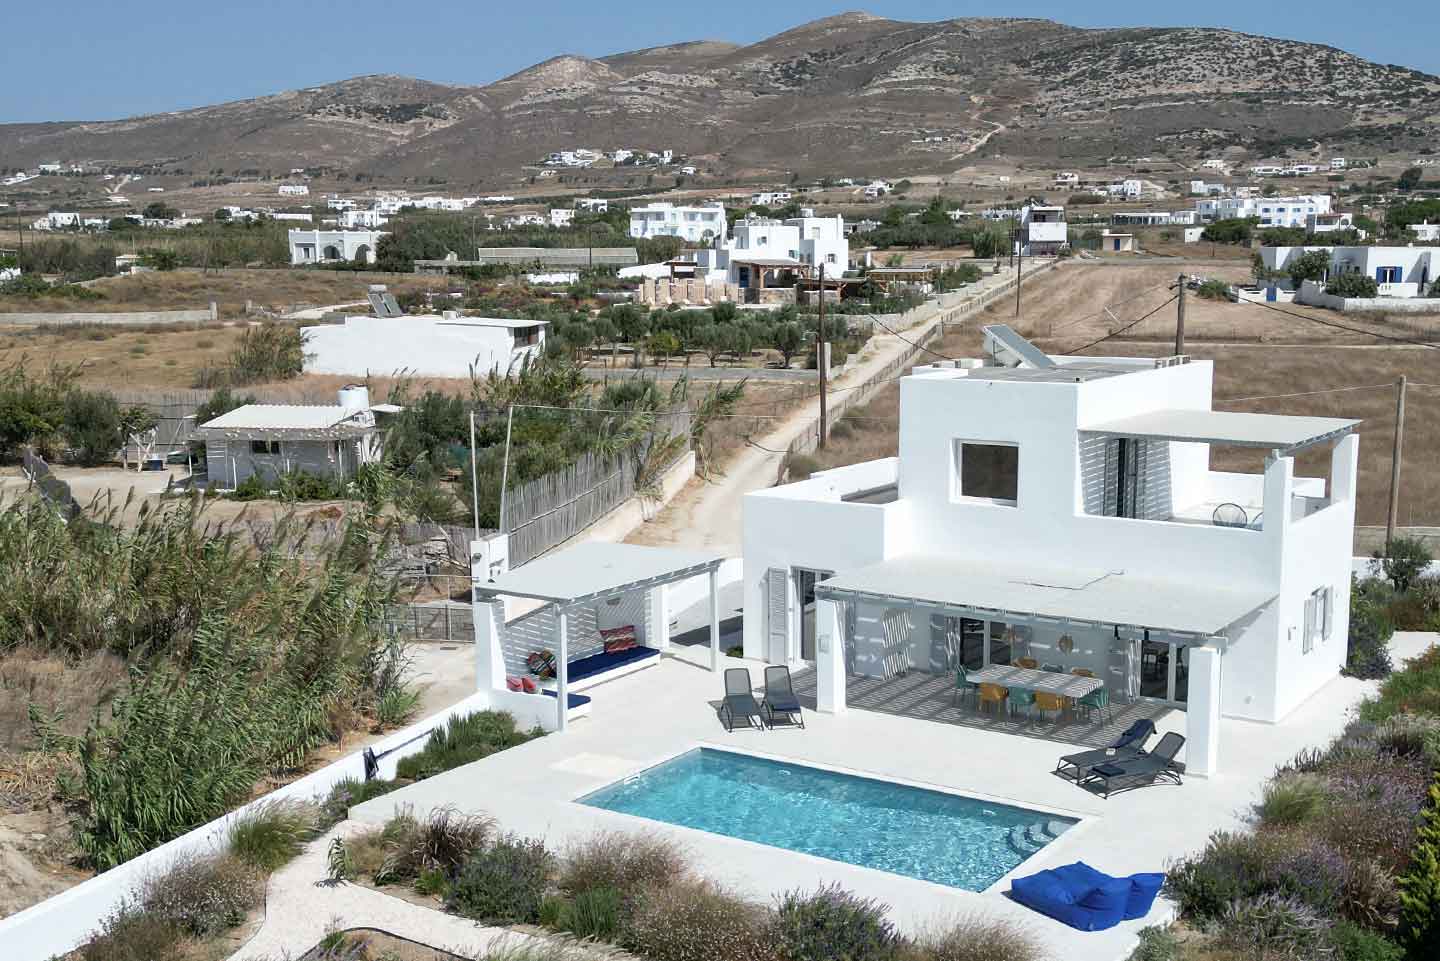 villa aura naxos gems accommodation vacation rentals villas for rent Kastraki Greece terrace lounge pool garden dining sunbeds panorama drone mountain view